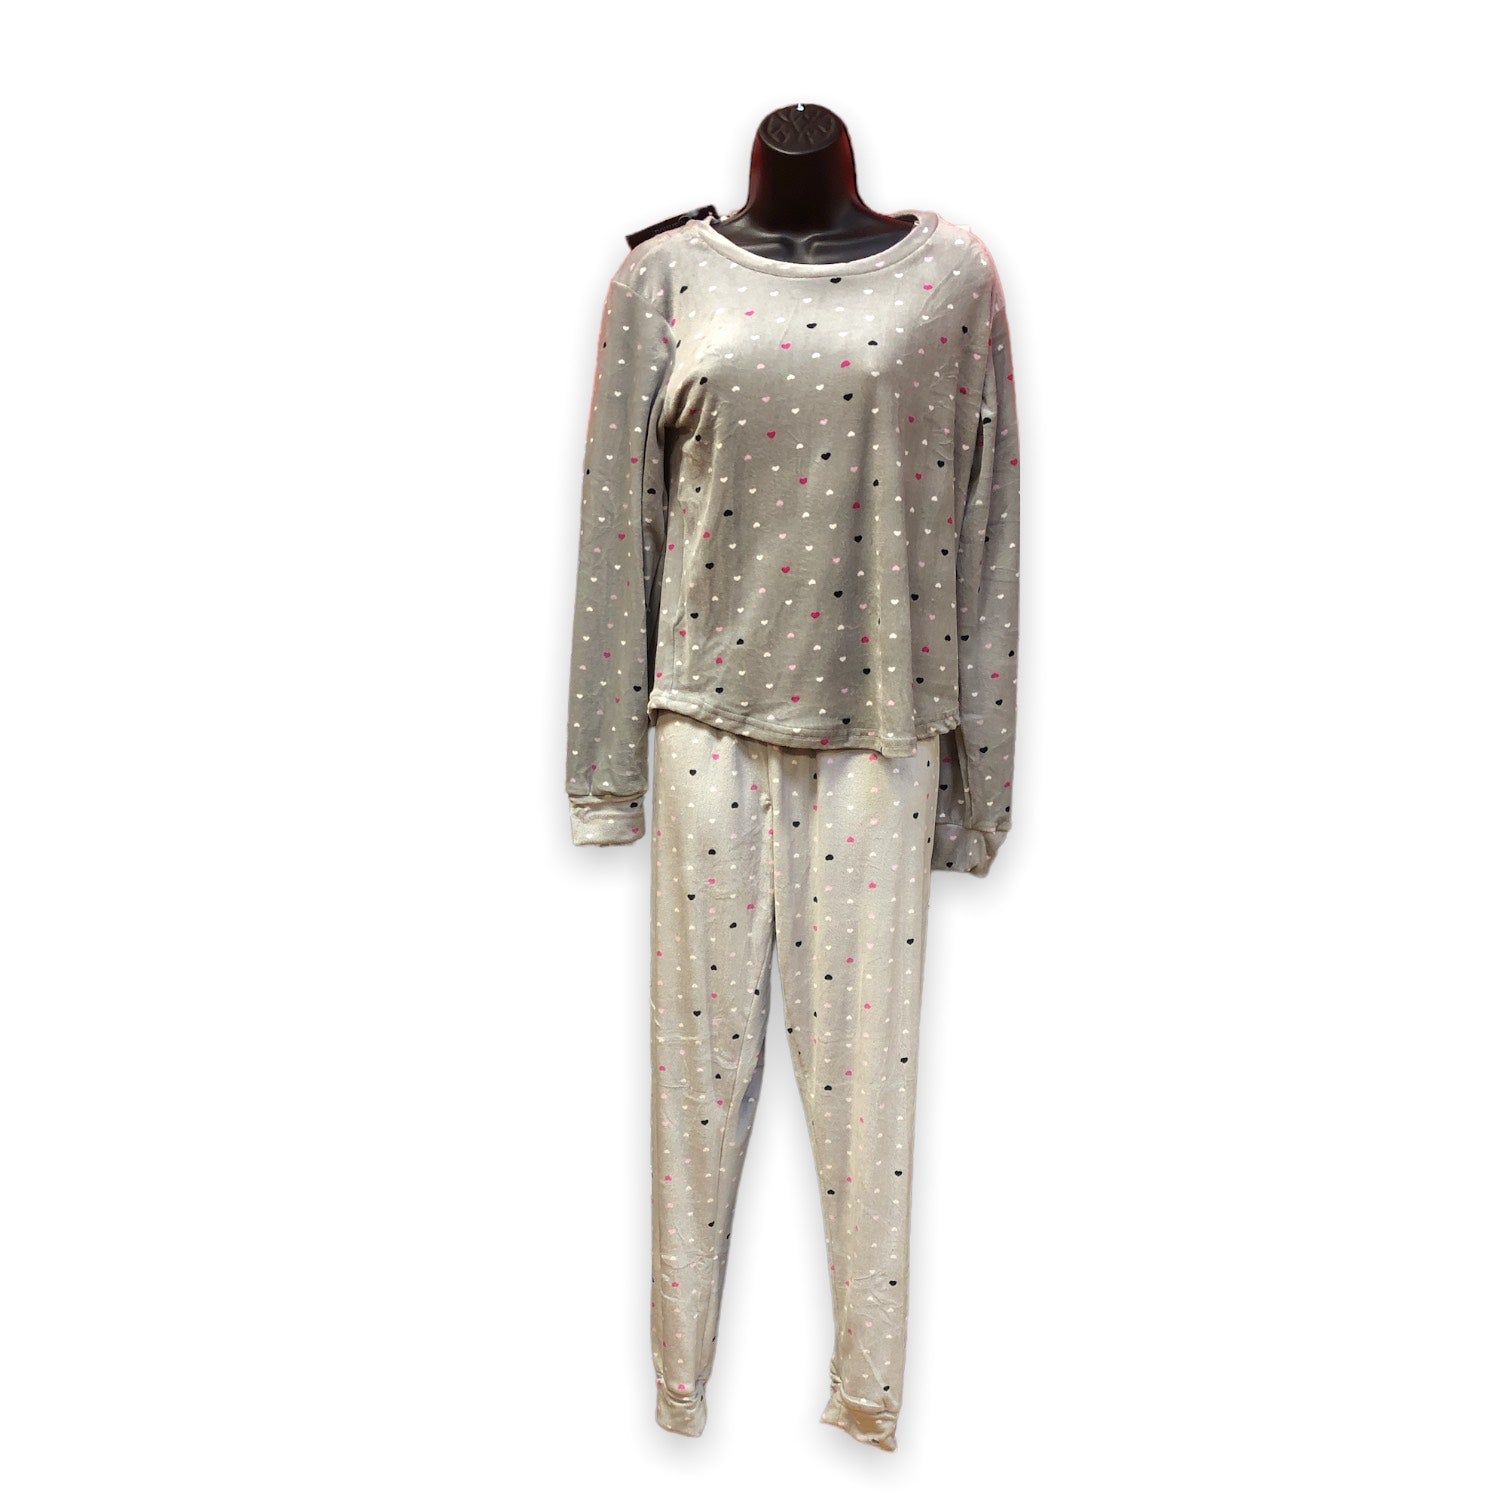 Women's Two Piece Velour Pajama Set with Long Jogger Pants